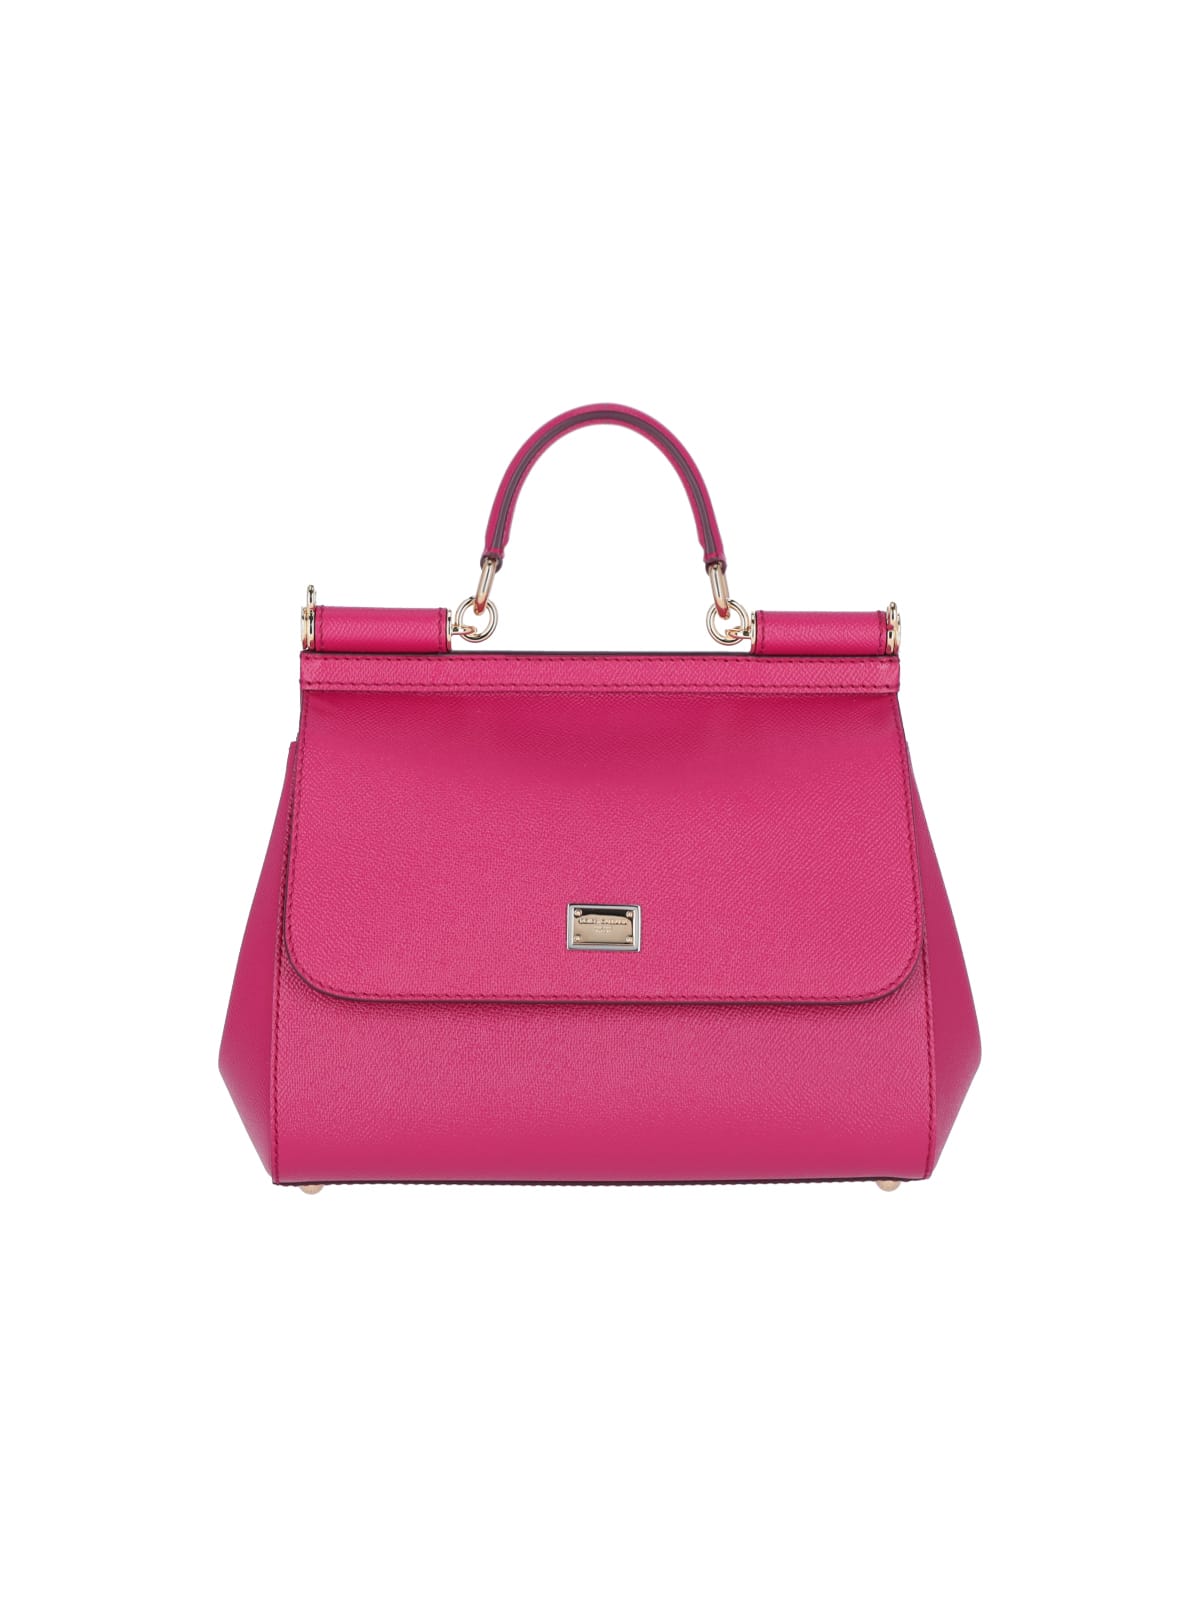 Dolce & Gabbana Sicily Large Handbag In Pink